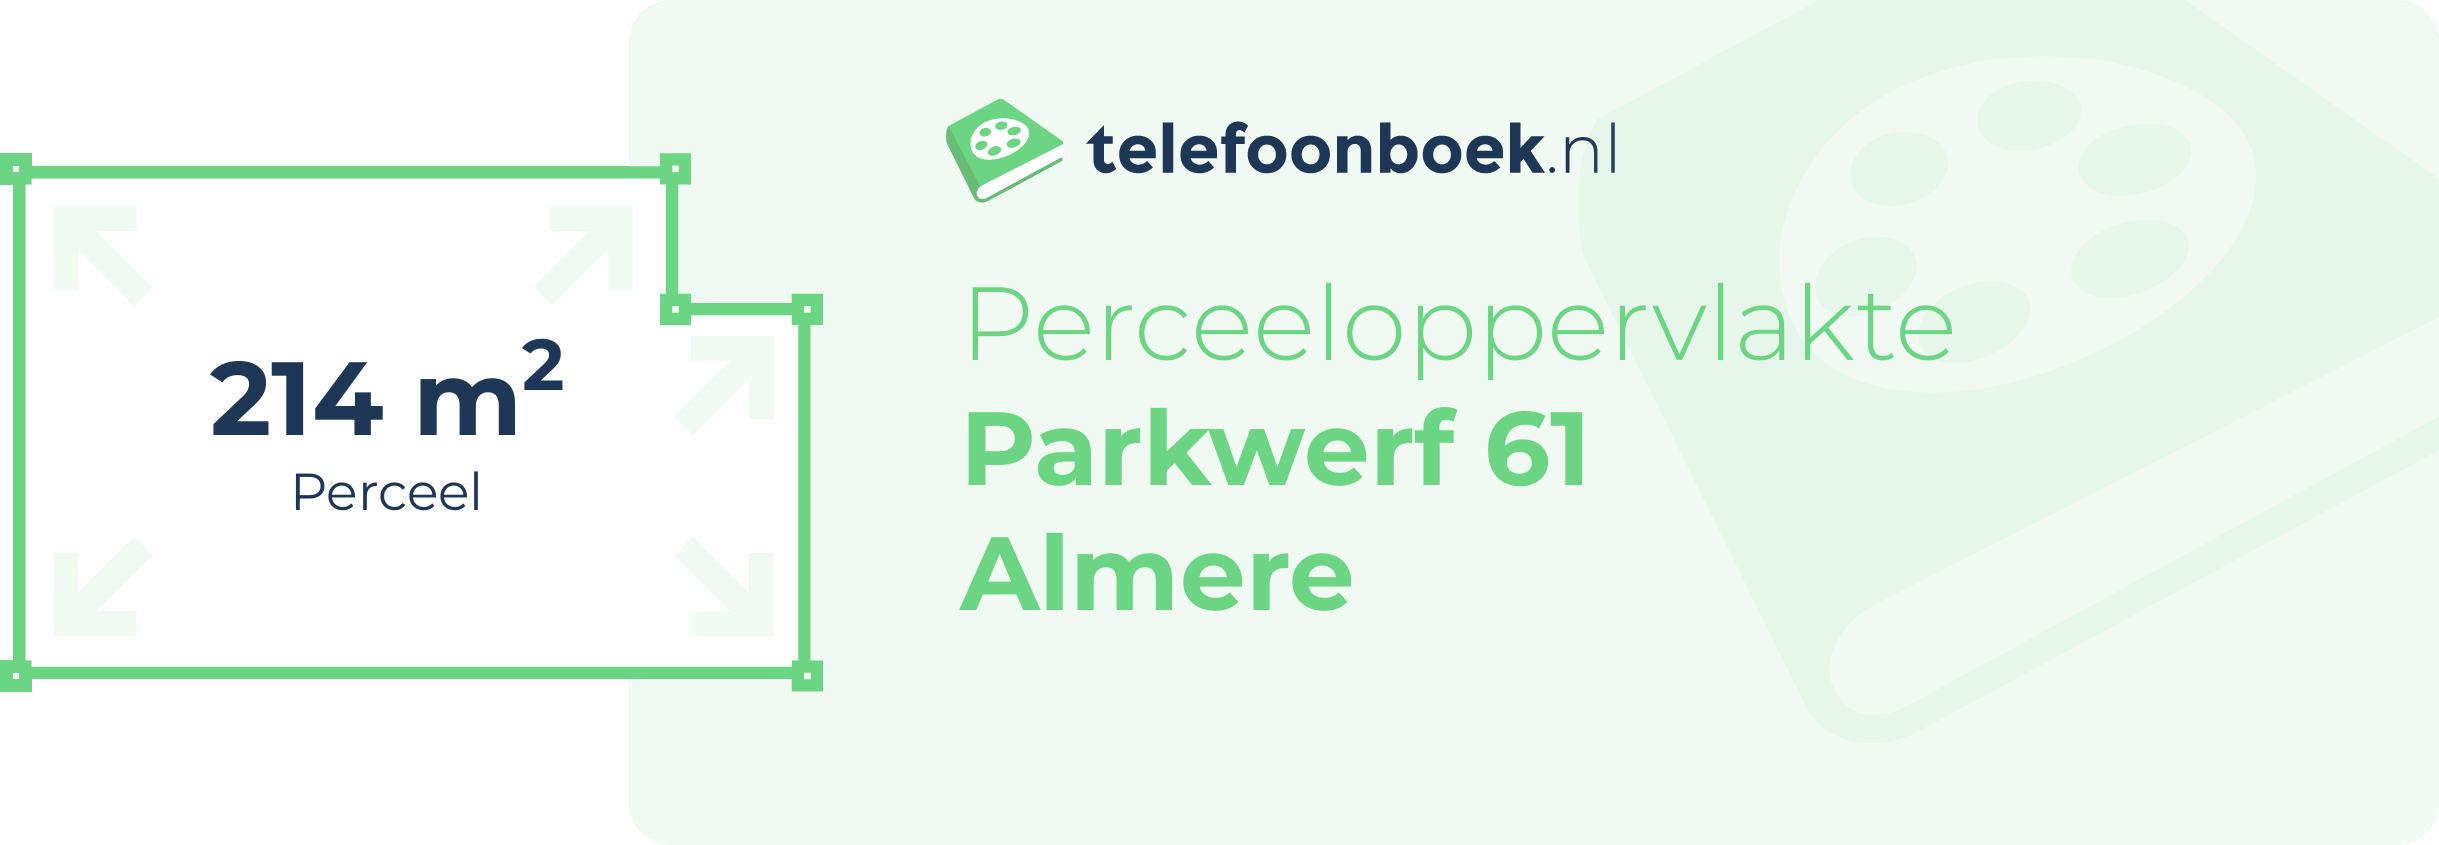 Perceeloppervlakte Parkwerf 61 Almere